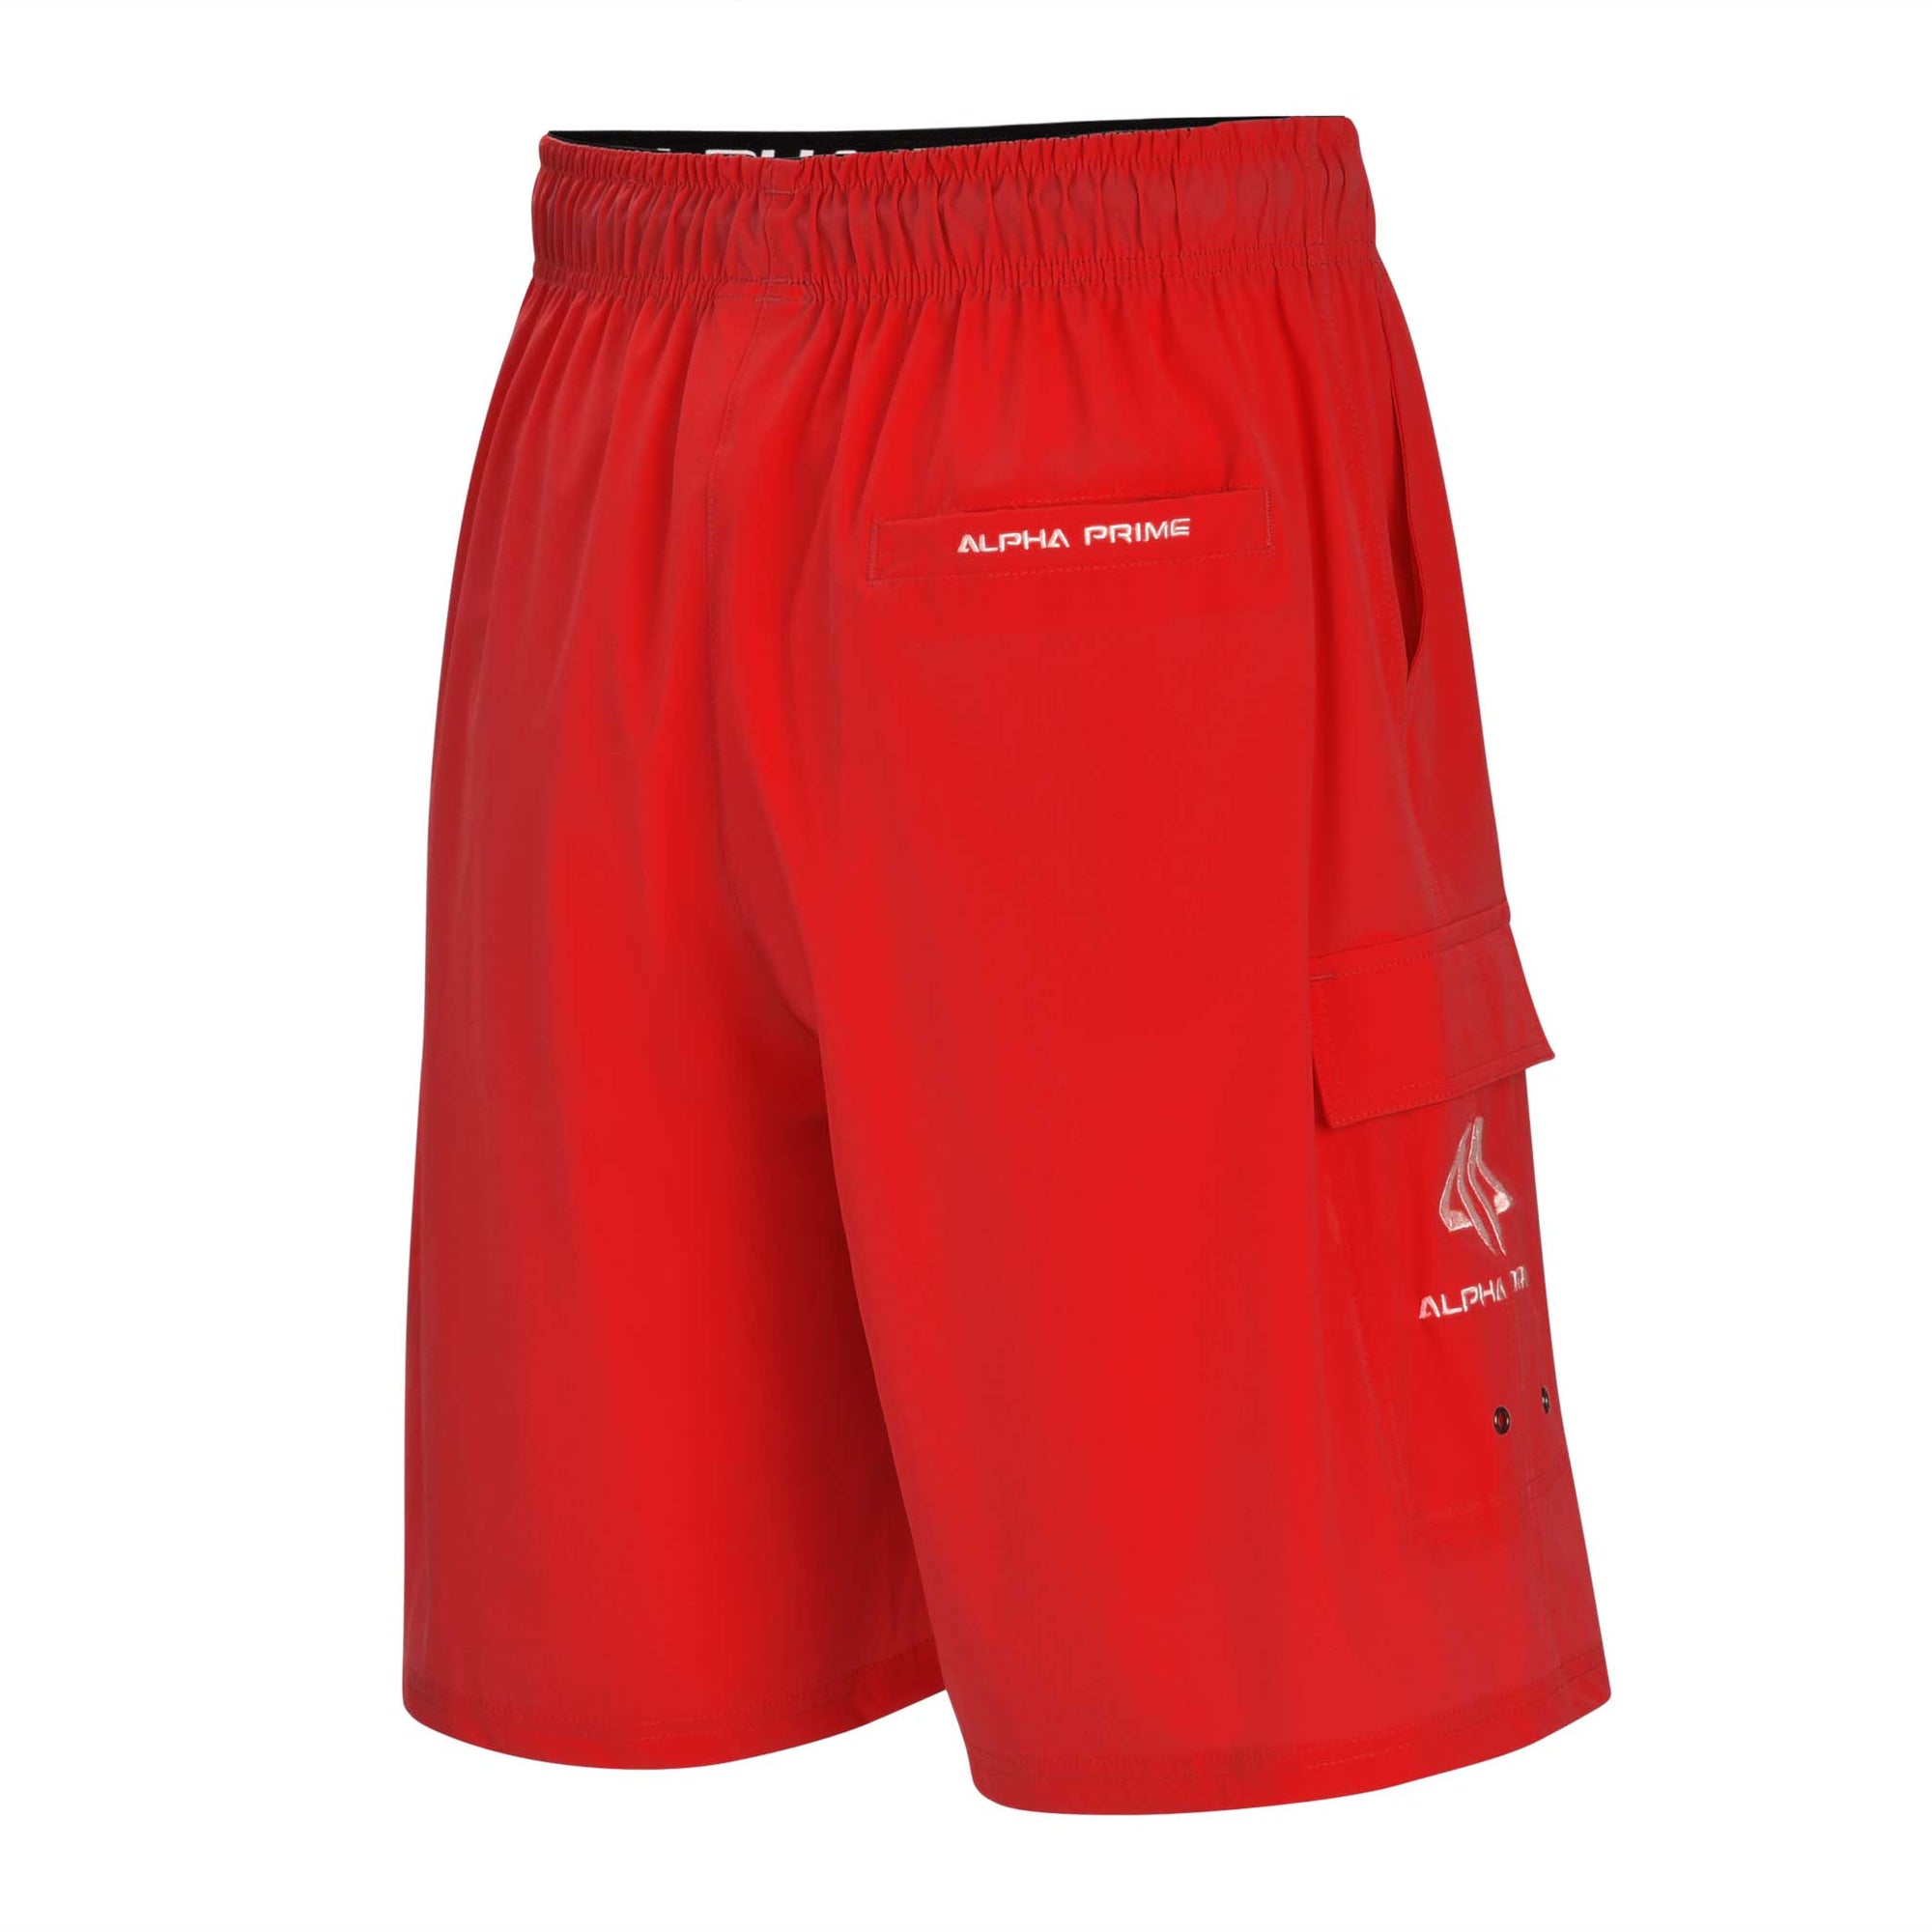 Prime Prime Red – - Shorts Sports Microfiber Alpha Alpha